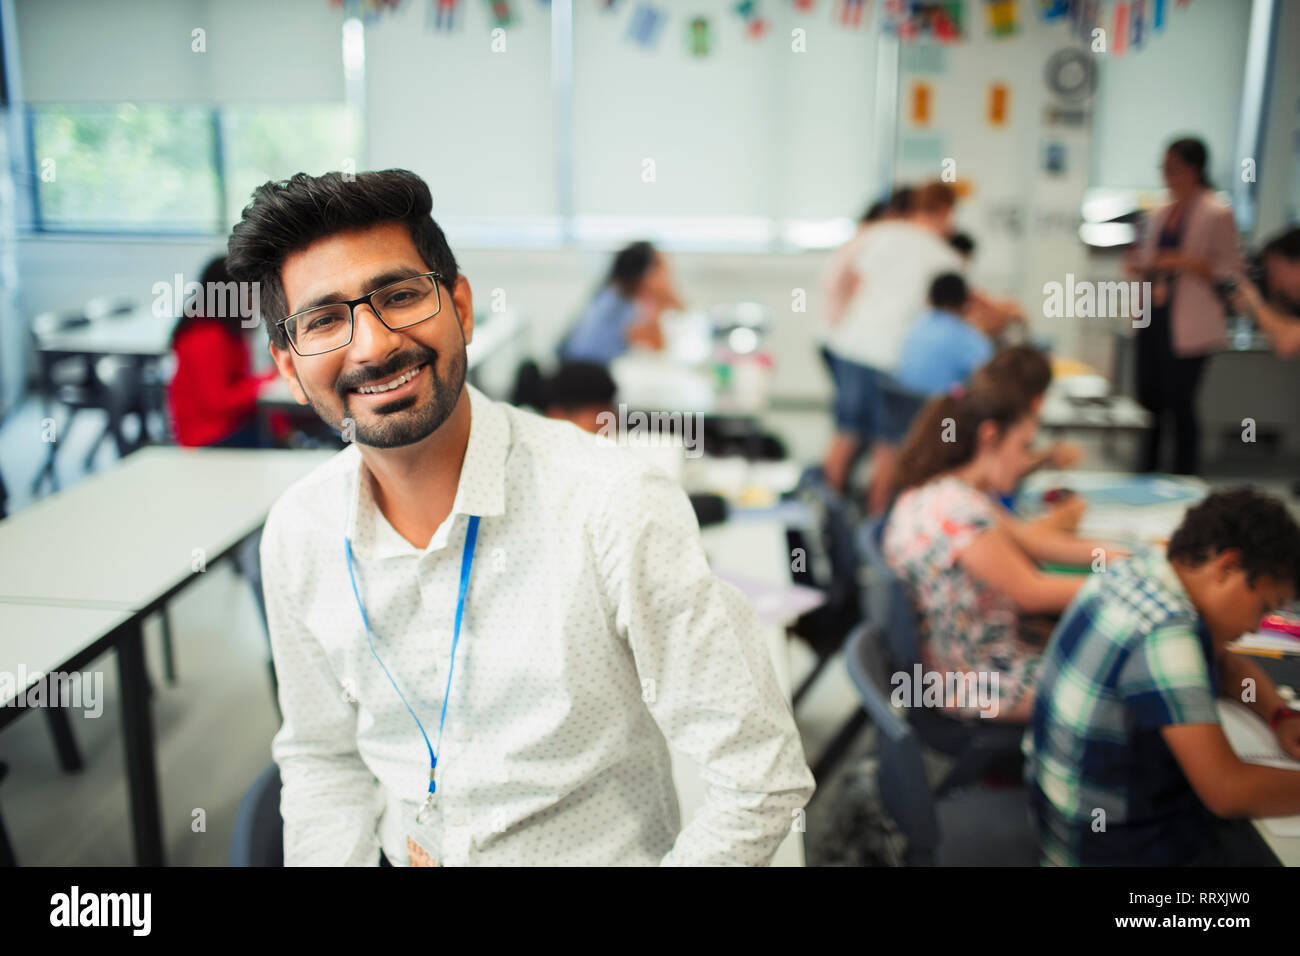 Portrait smiling, confident male teacher in classroom Stock Photo